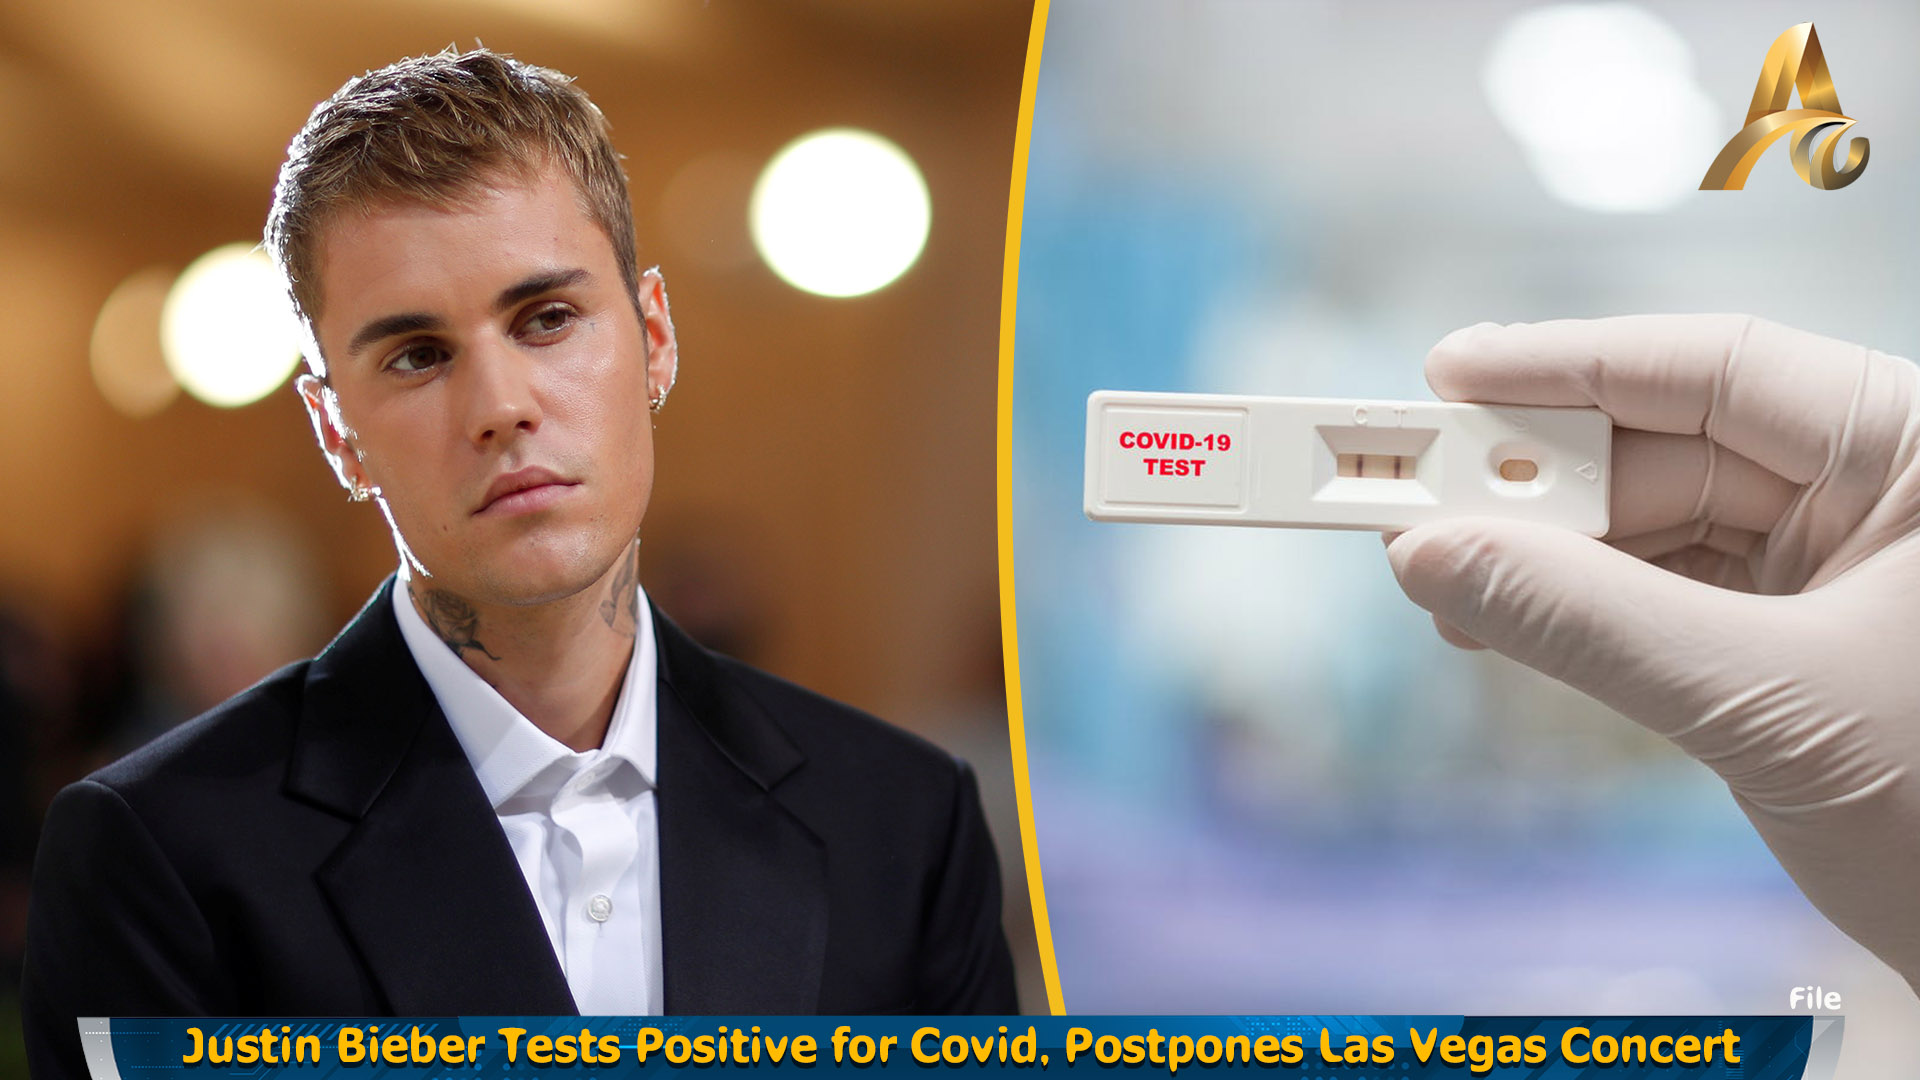 Justin Bieber postpones Las Vegas show due to positive COVID-19